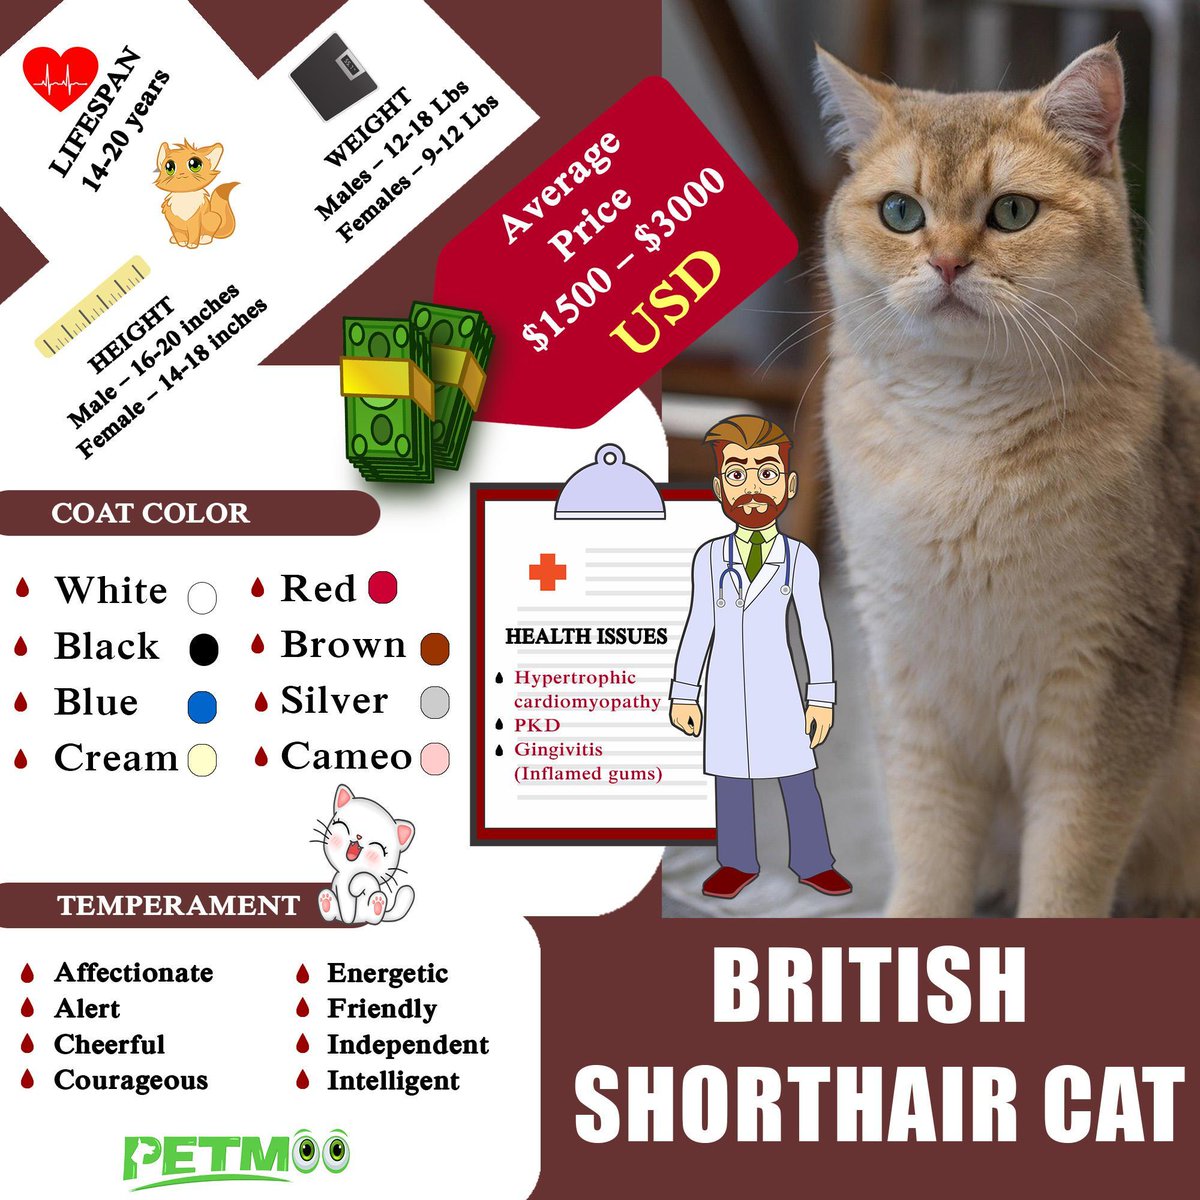 British Shorthair Cat Infographic
#petmoo #pets #cats #catbreeds #catinfographic #britishshorthaircatinfographic #britishshorthaircat